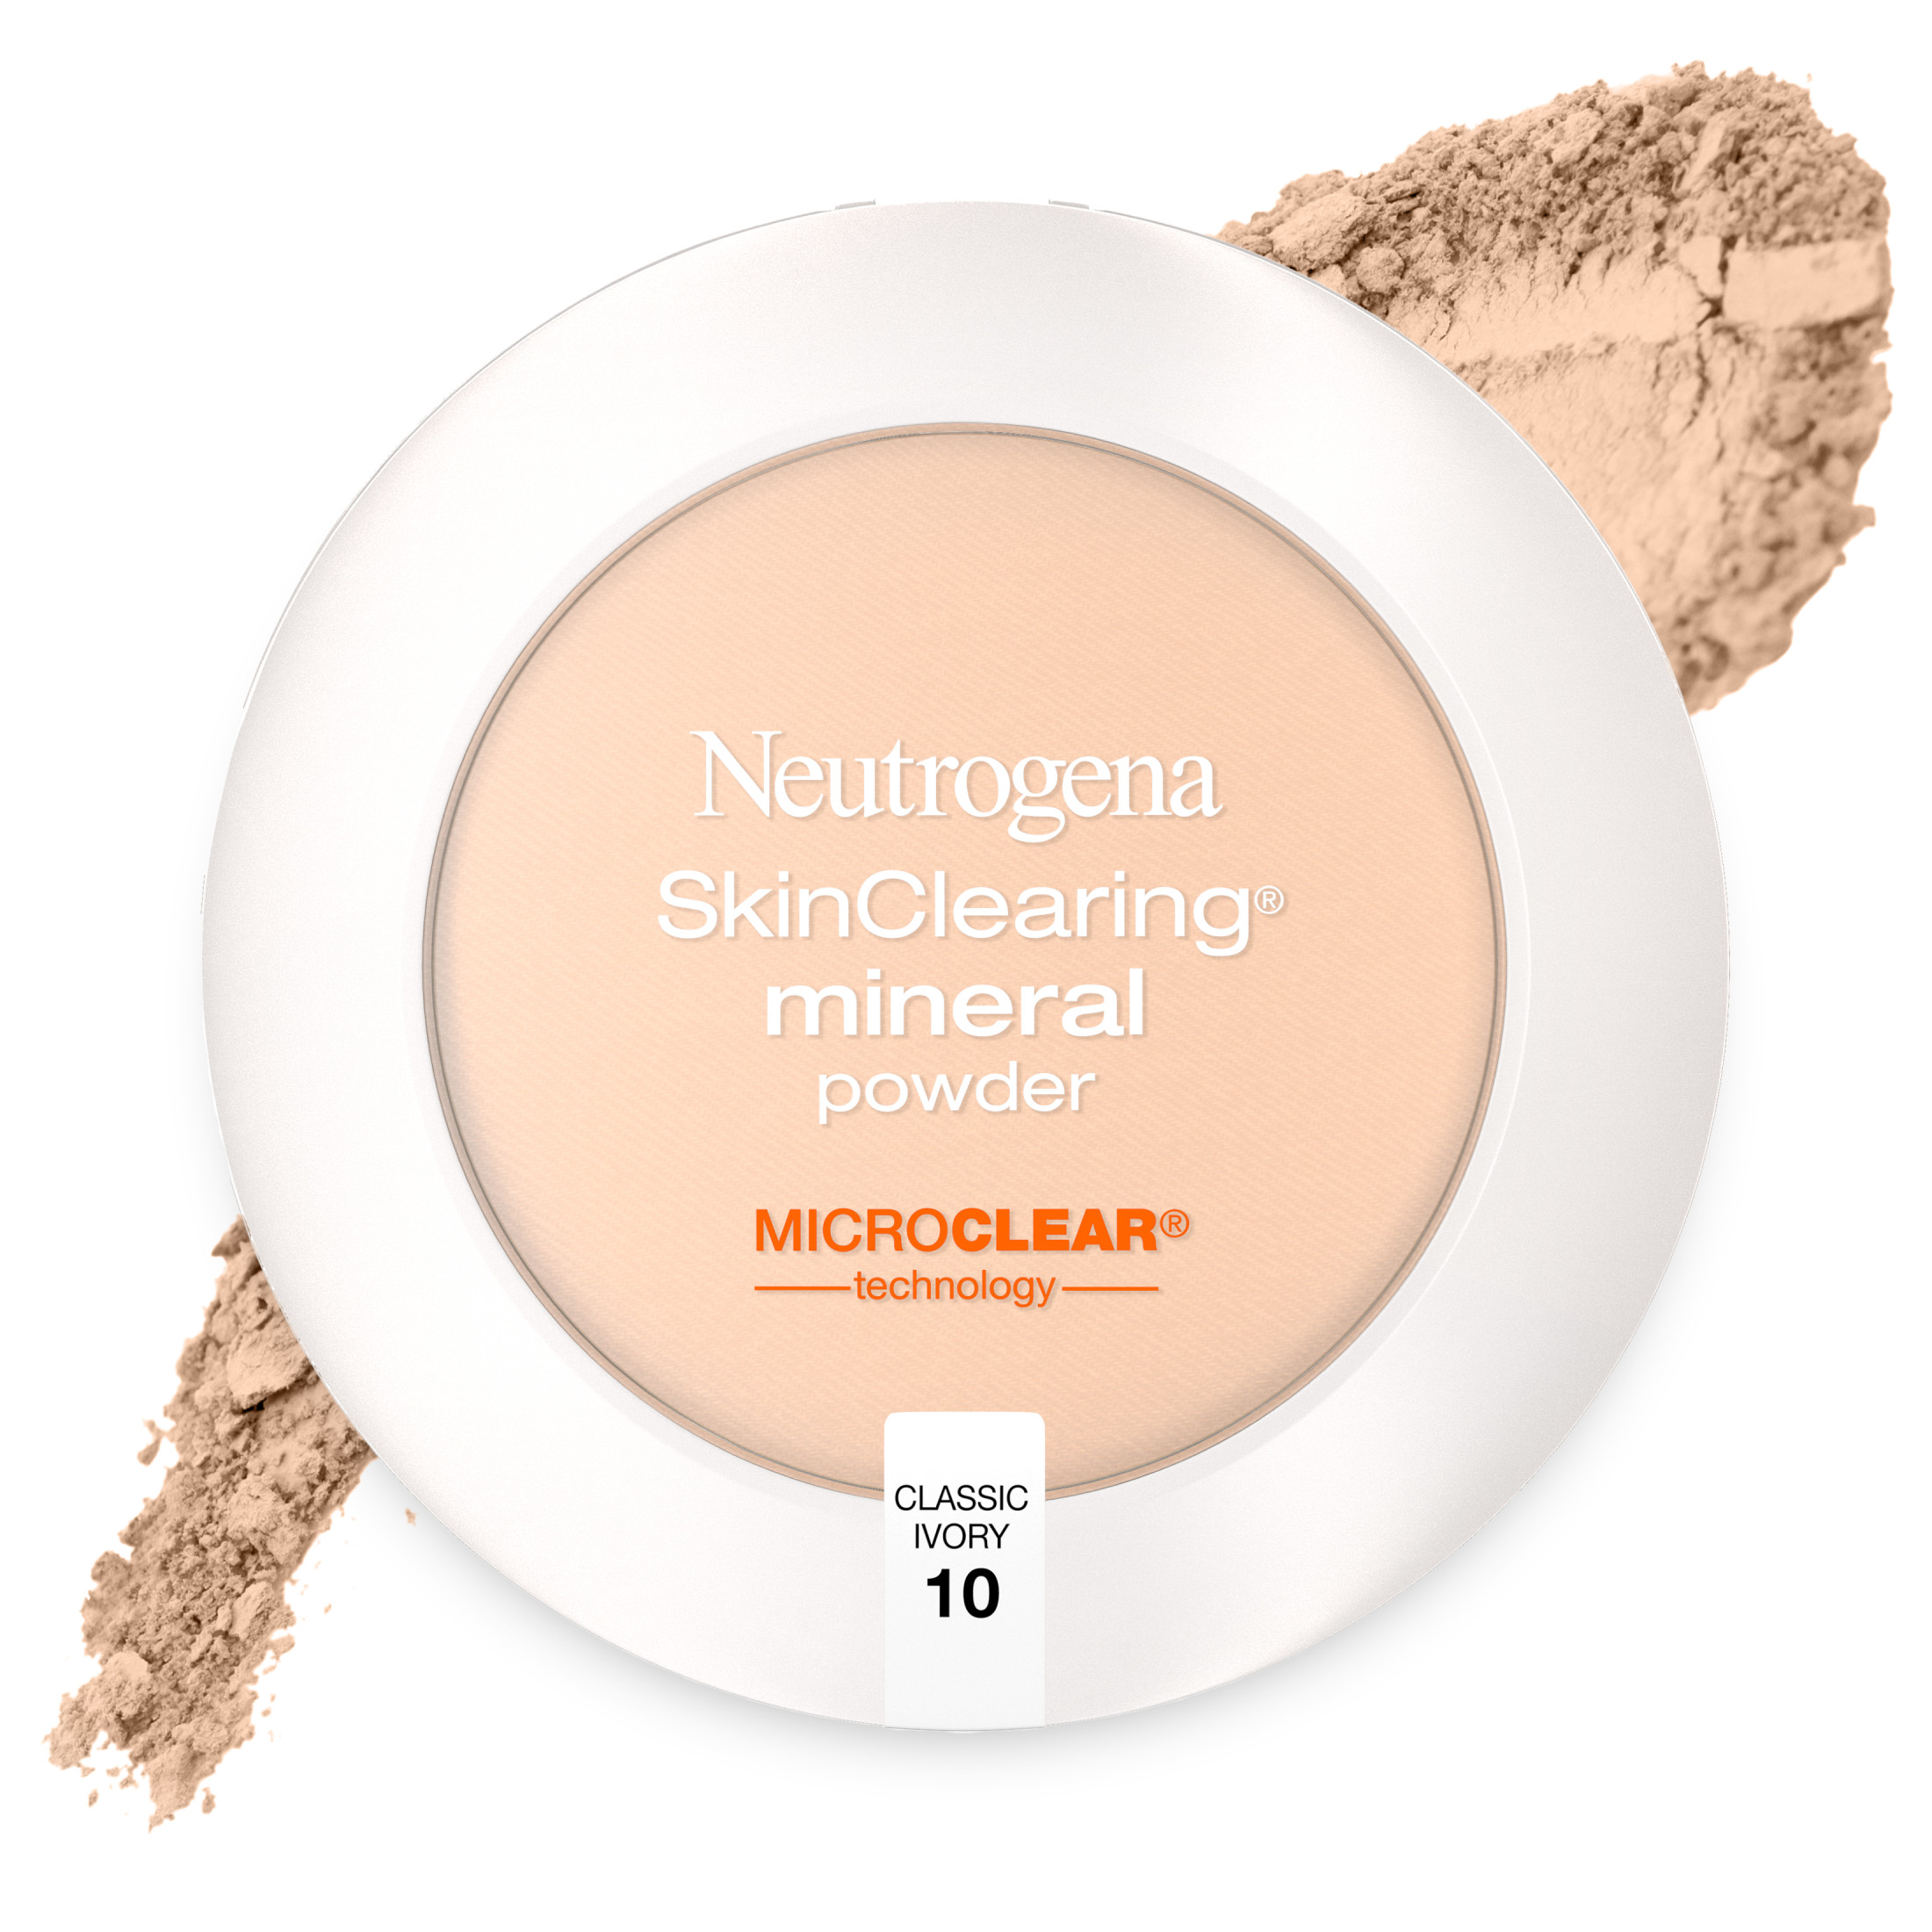 Neutrogena SkinClearing Pressed Acne Powder, Classic Ivory 10,.38 oz - image 1 of 9